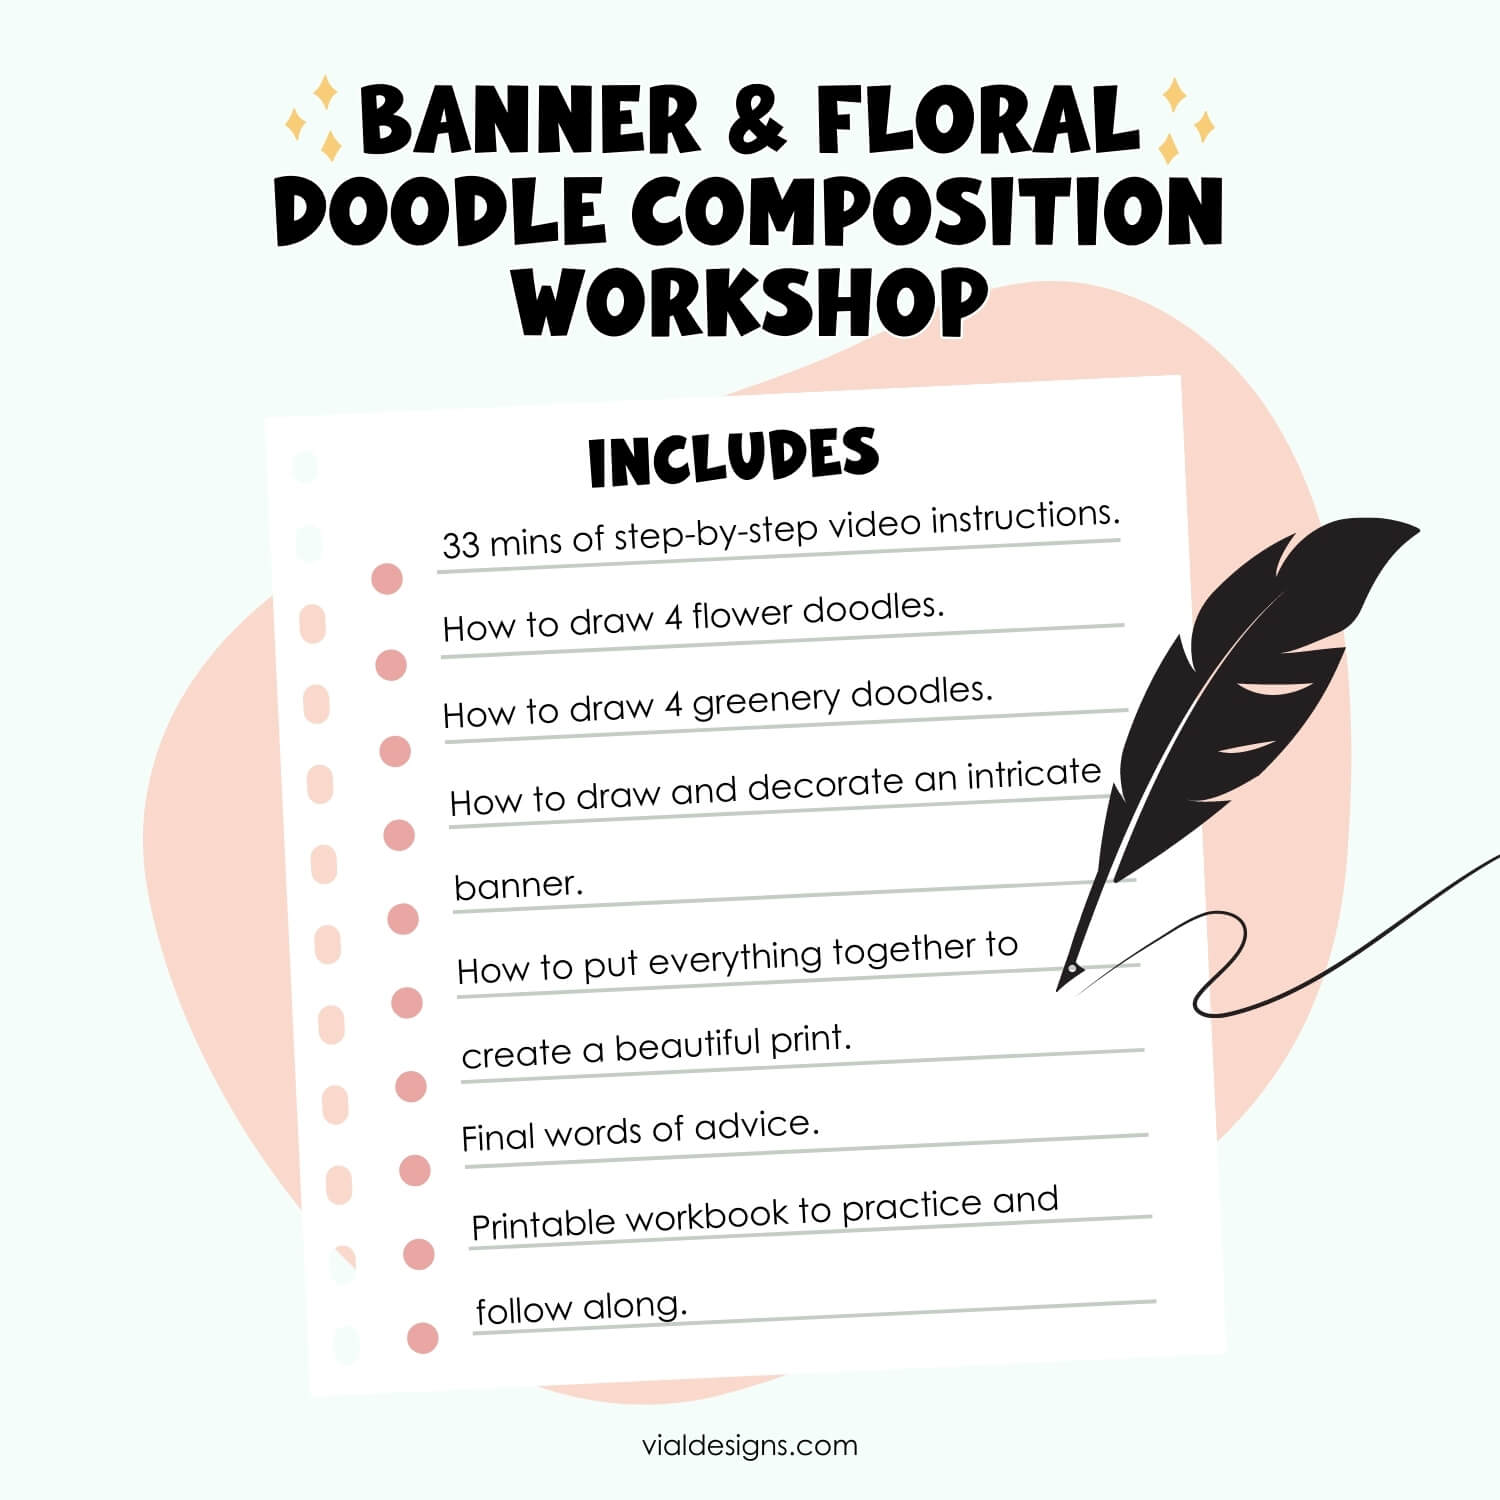 banner and floral doodle composition workshop course details